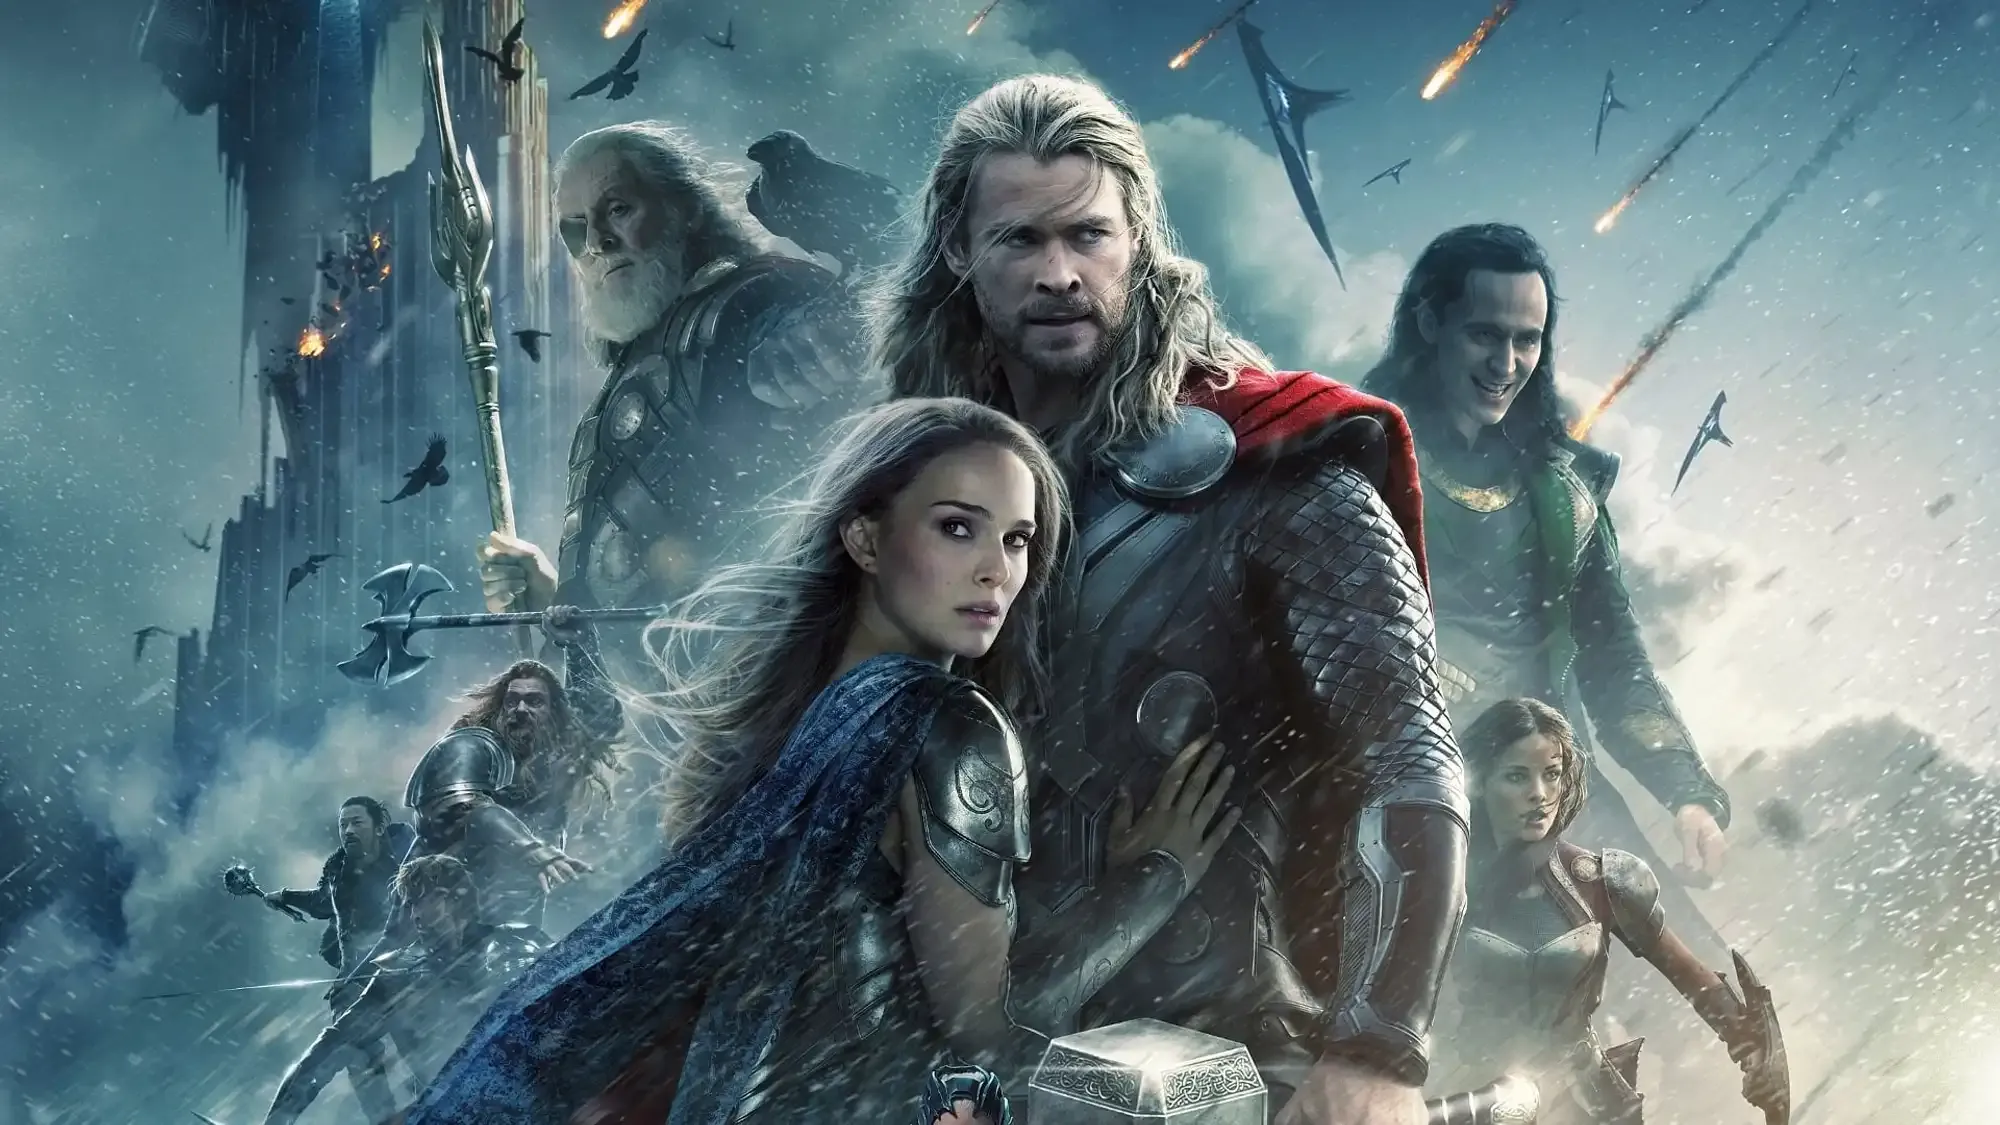 Thor: The Dark World movie review